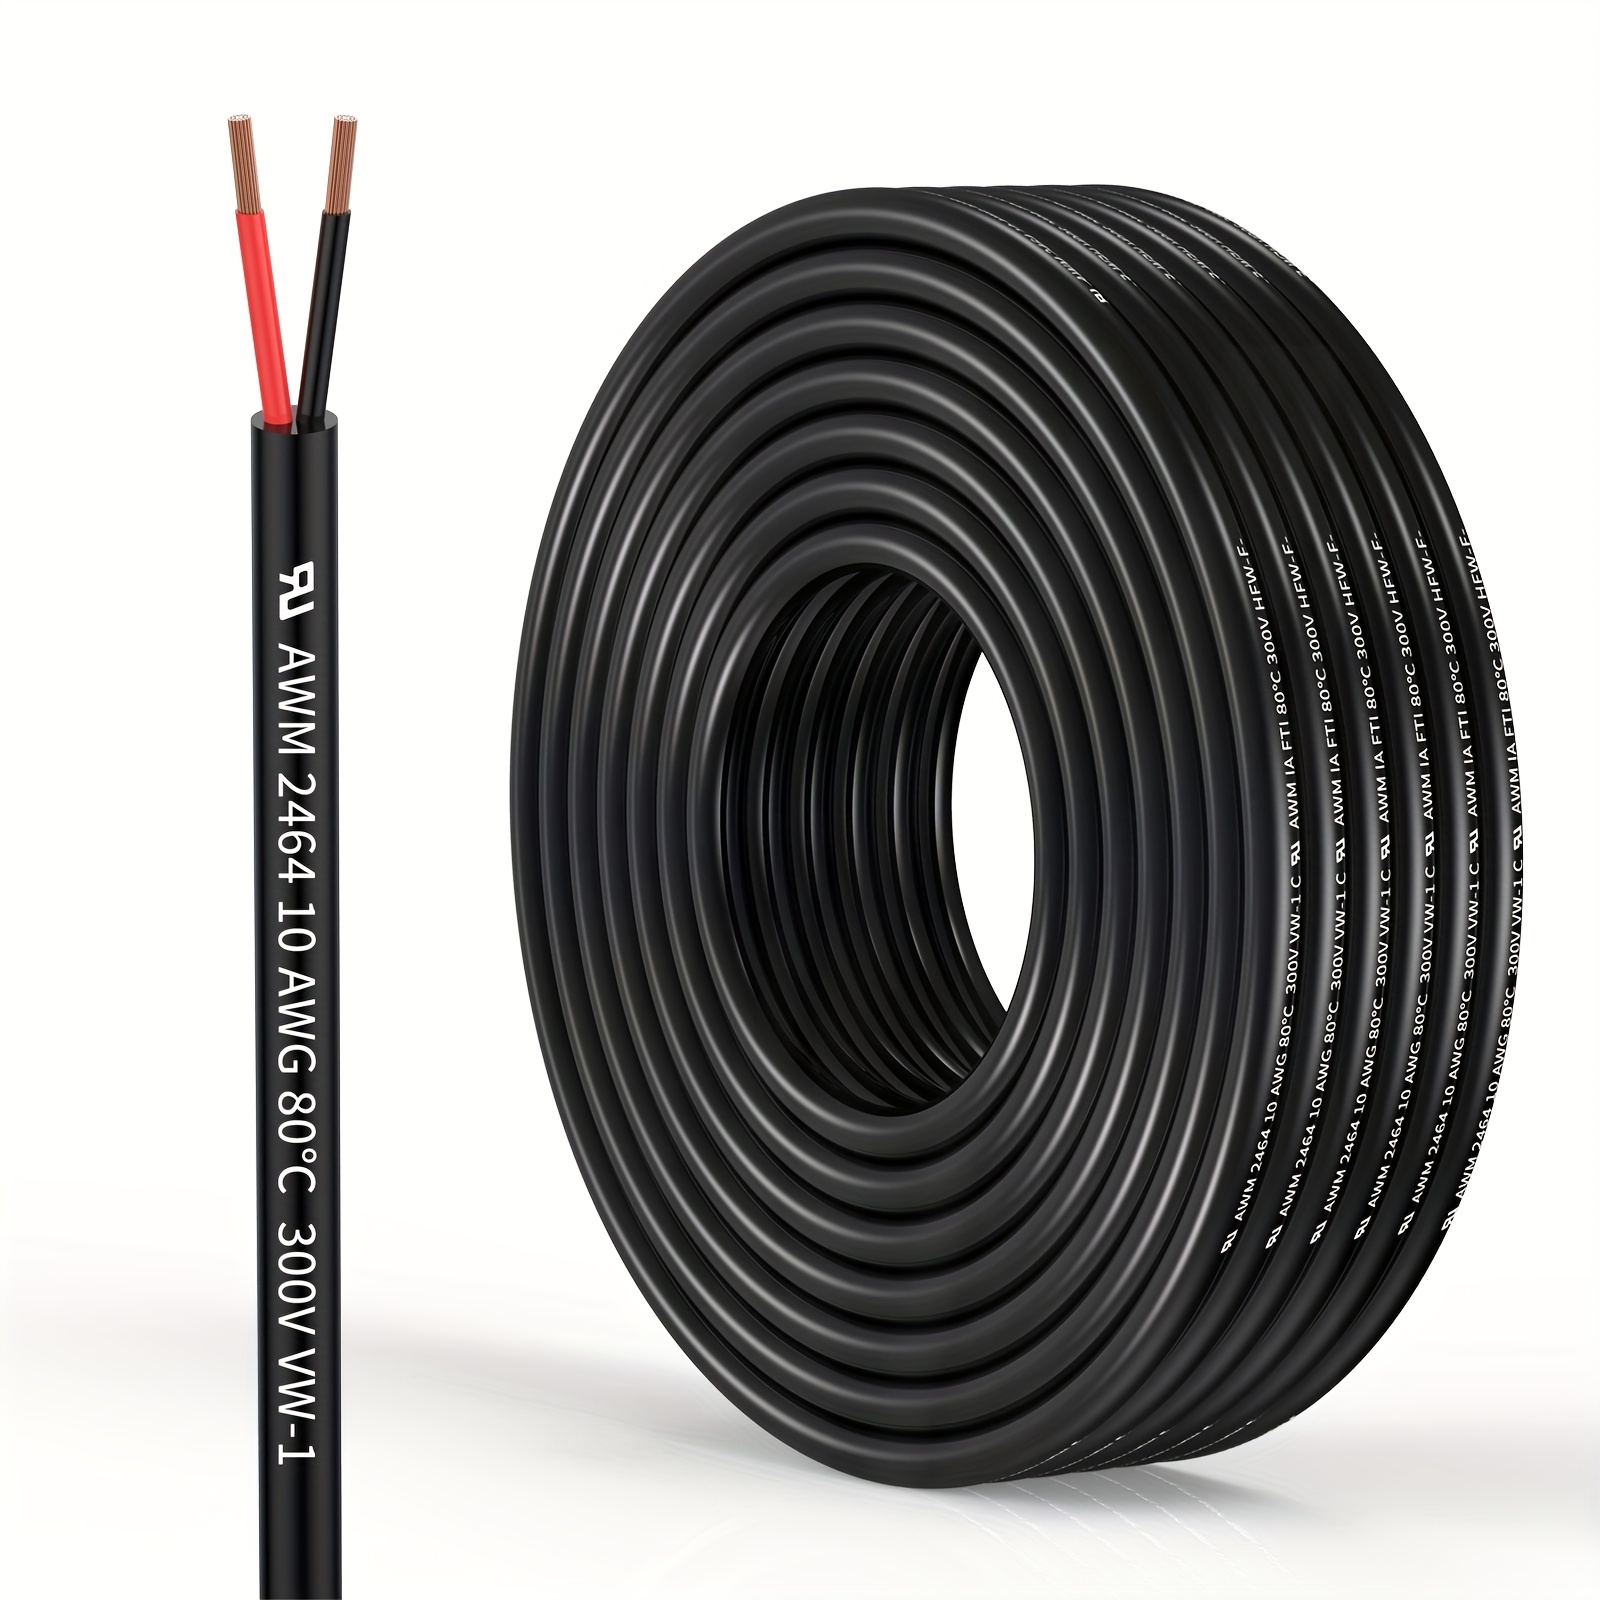 Cable eléctrico calibre 10 12 14 16 18 20 22 AWG, 20 pies, cable de  silicona – cables suaves y flexibles de alambre de cobre estañado,  resistentes a